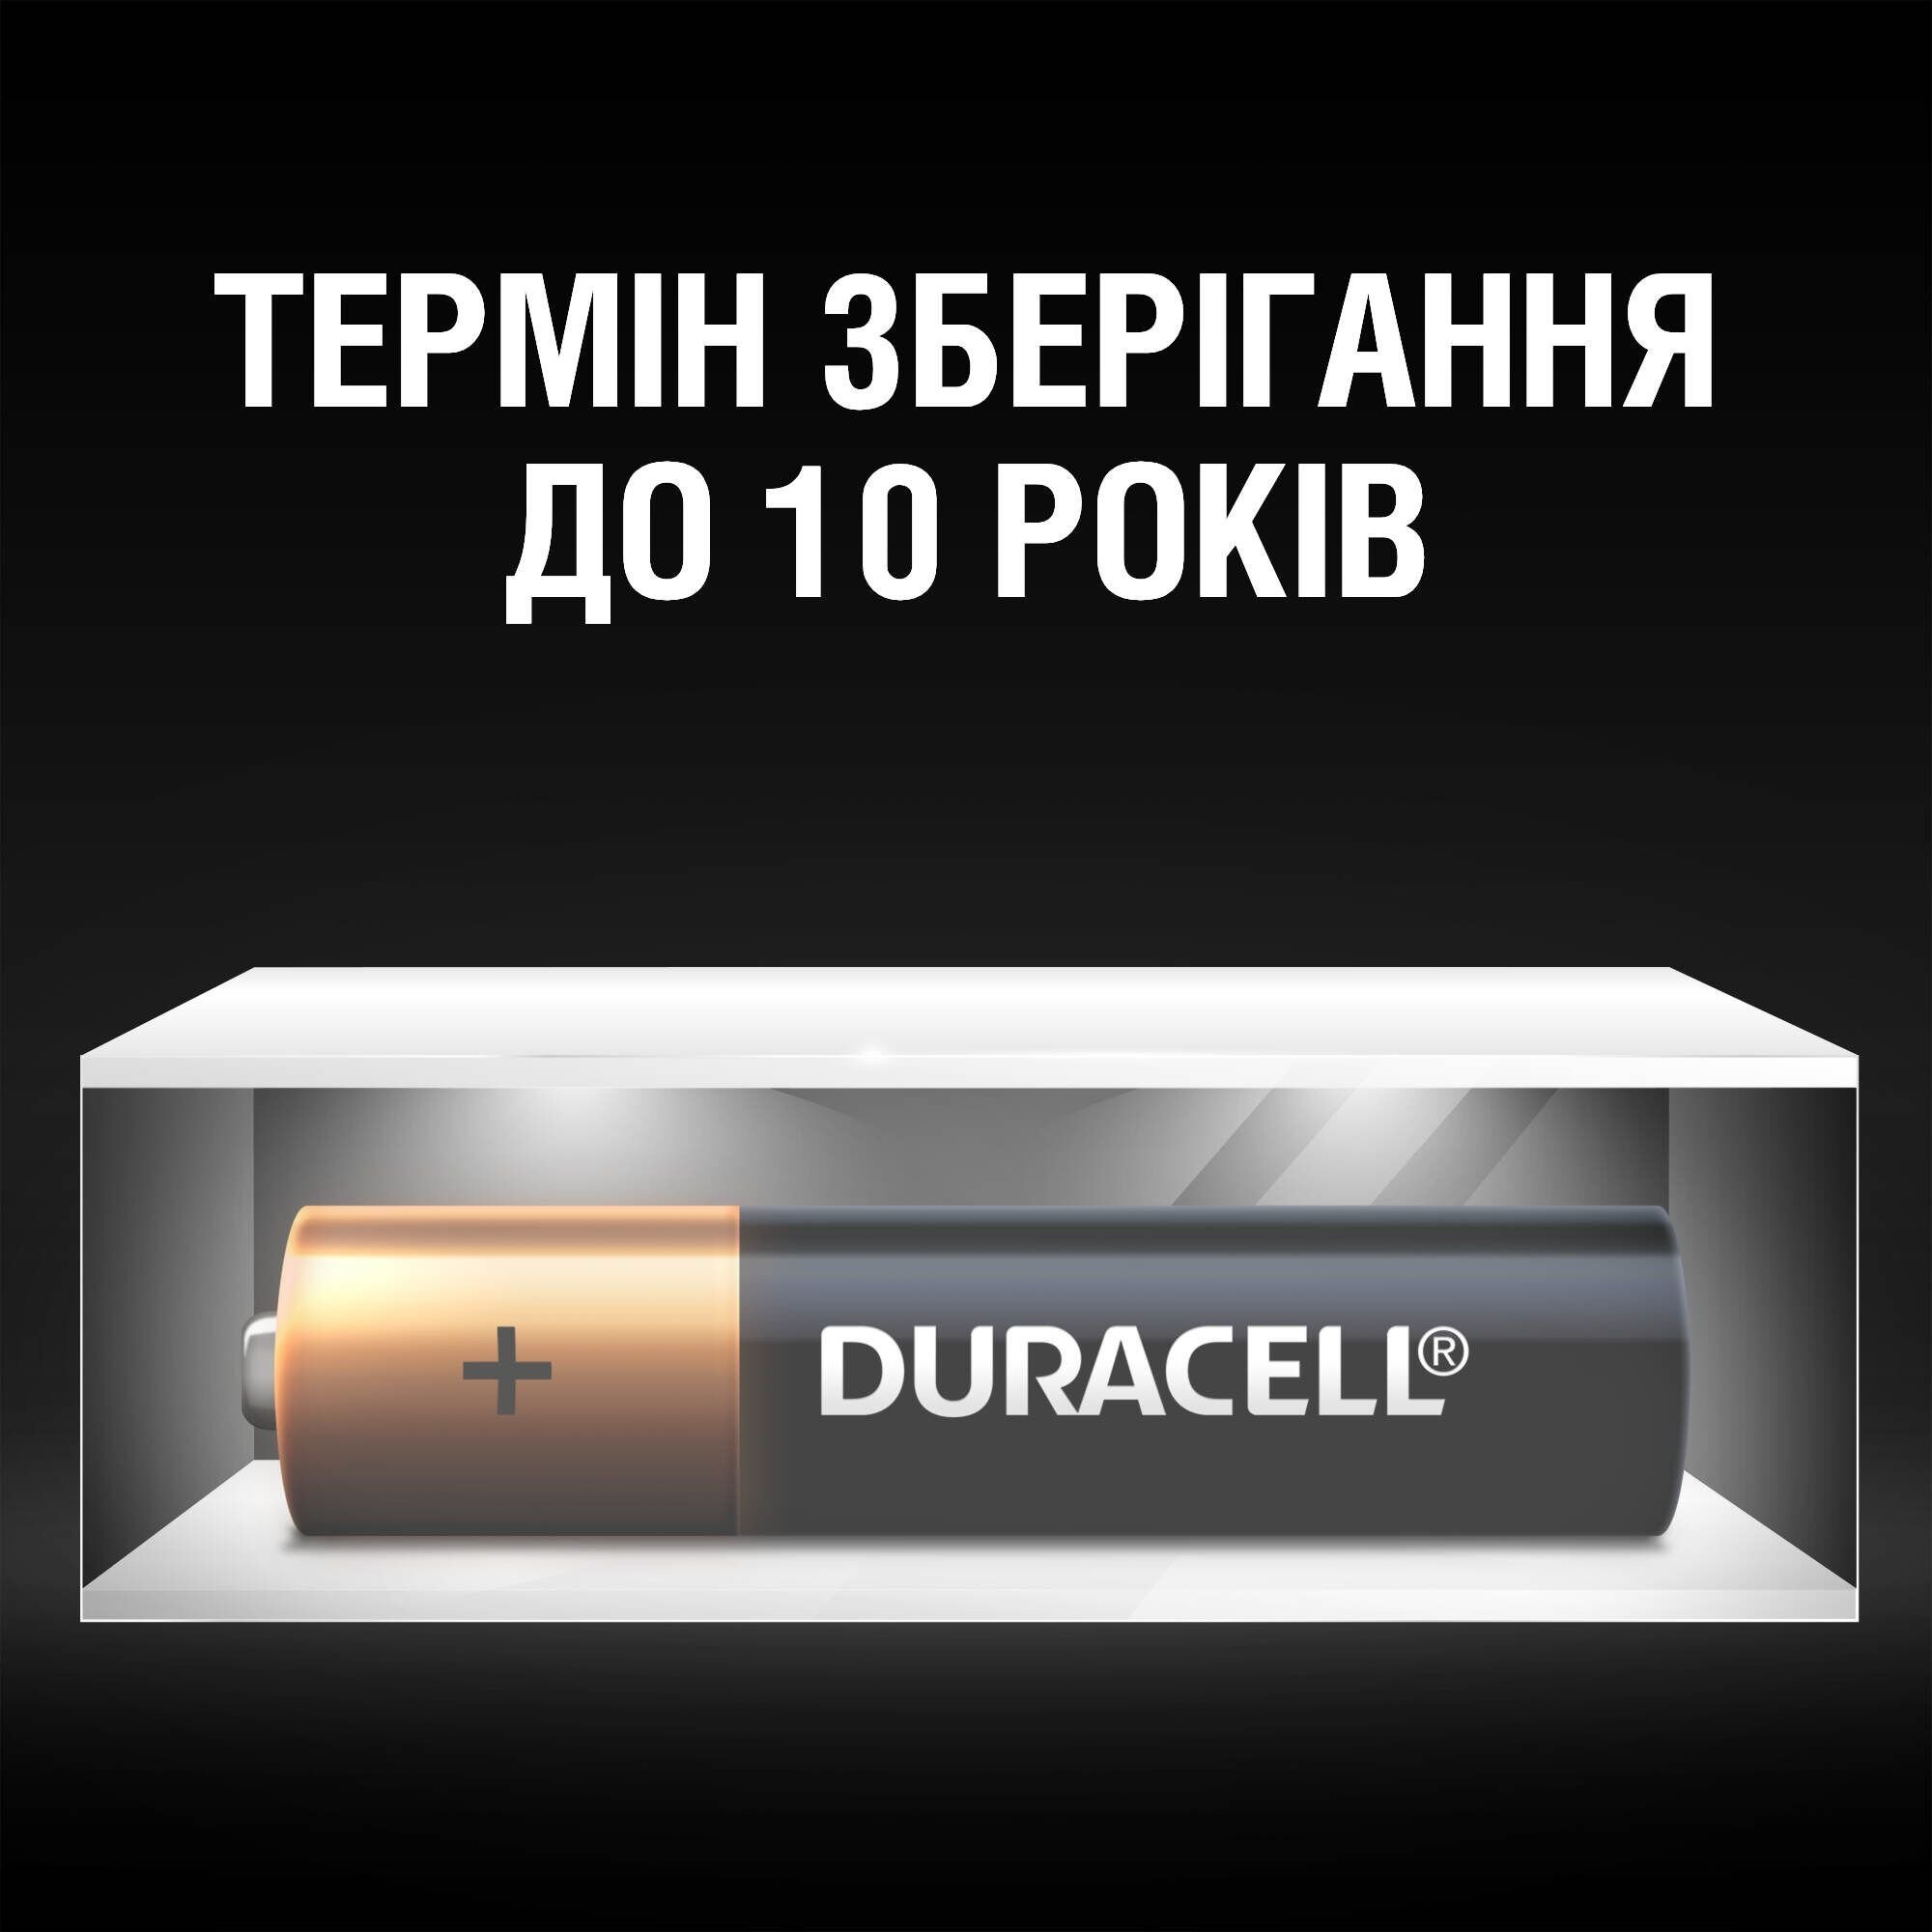 Щелочные батарейки мизинчиковые Duracell 1.5 V AAA LR03/MN2400, 4 шт. (706006) - фото 5